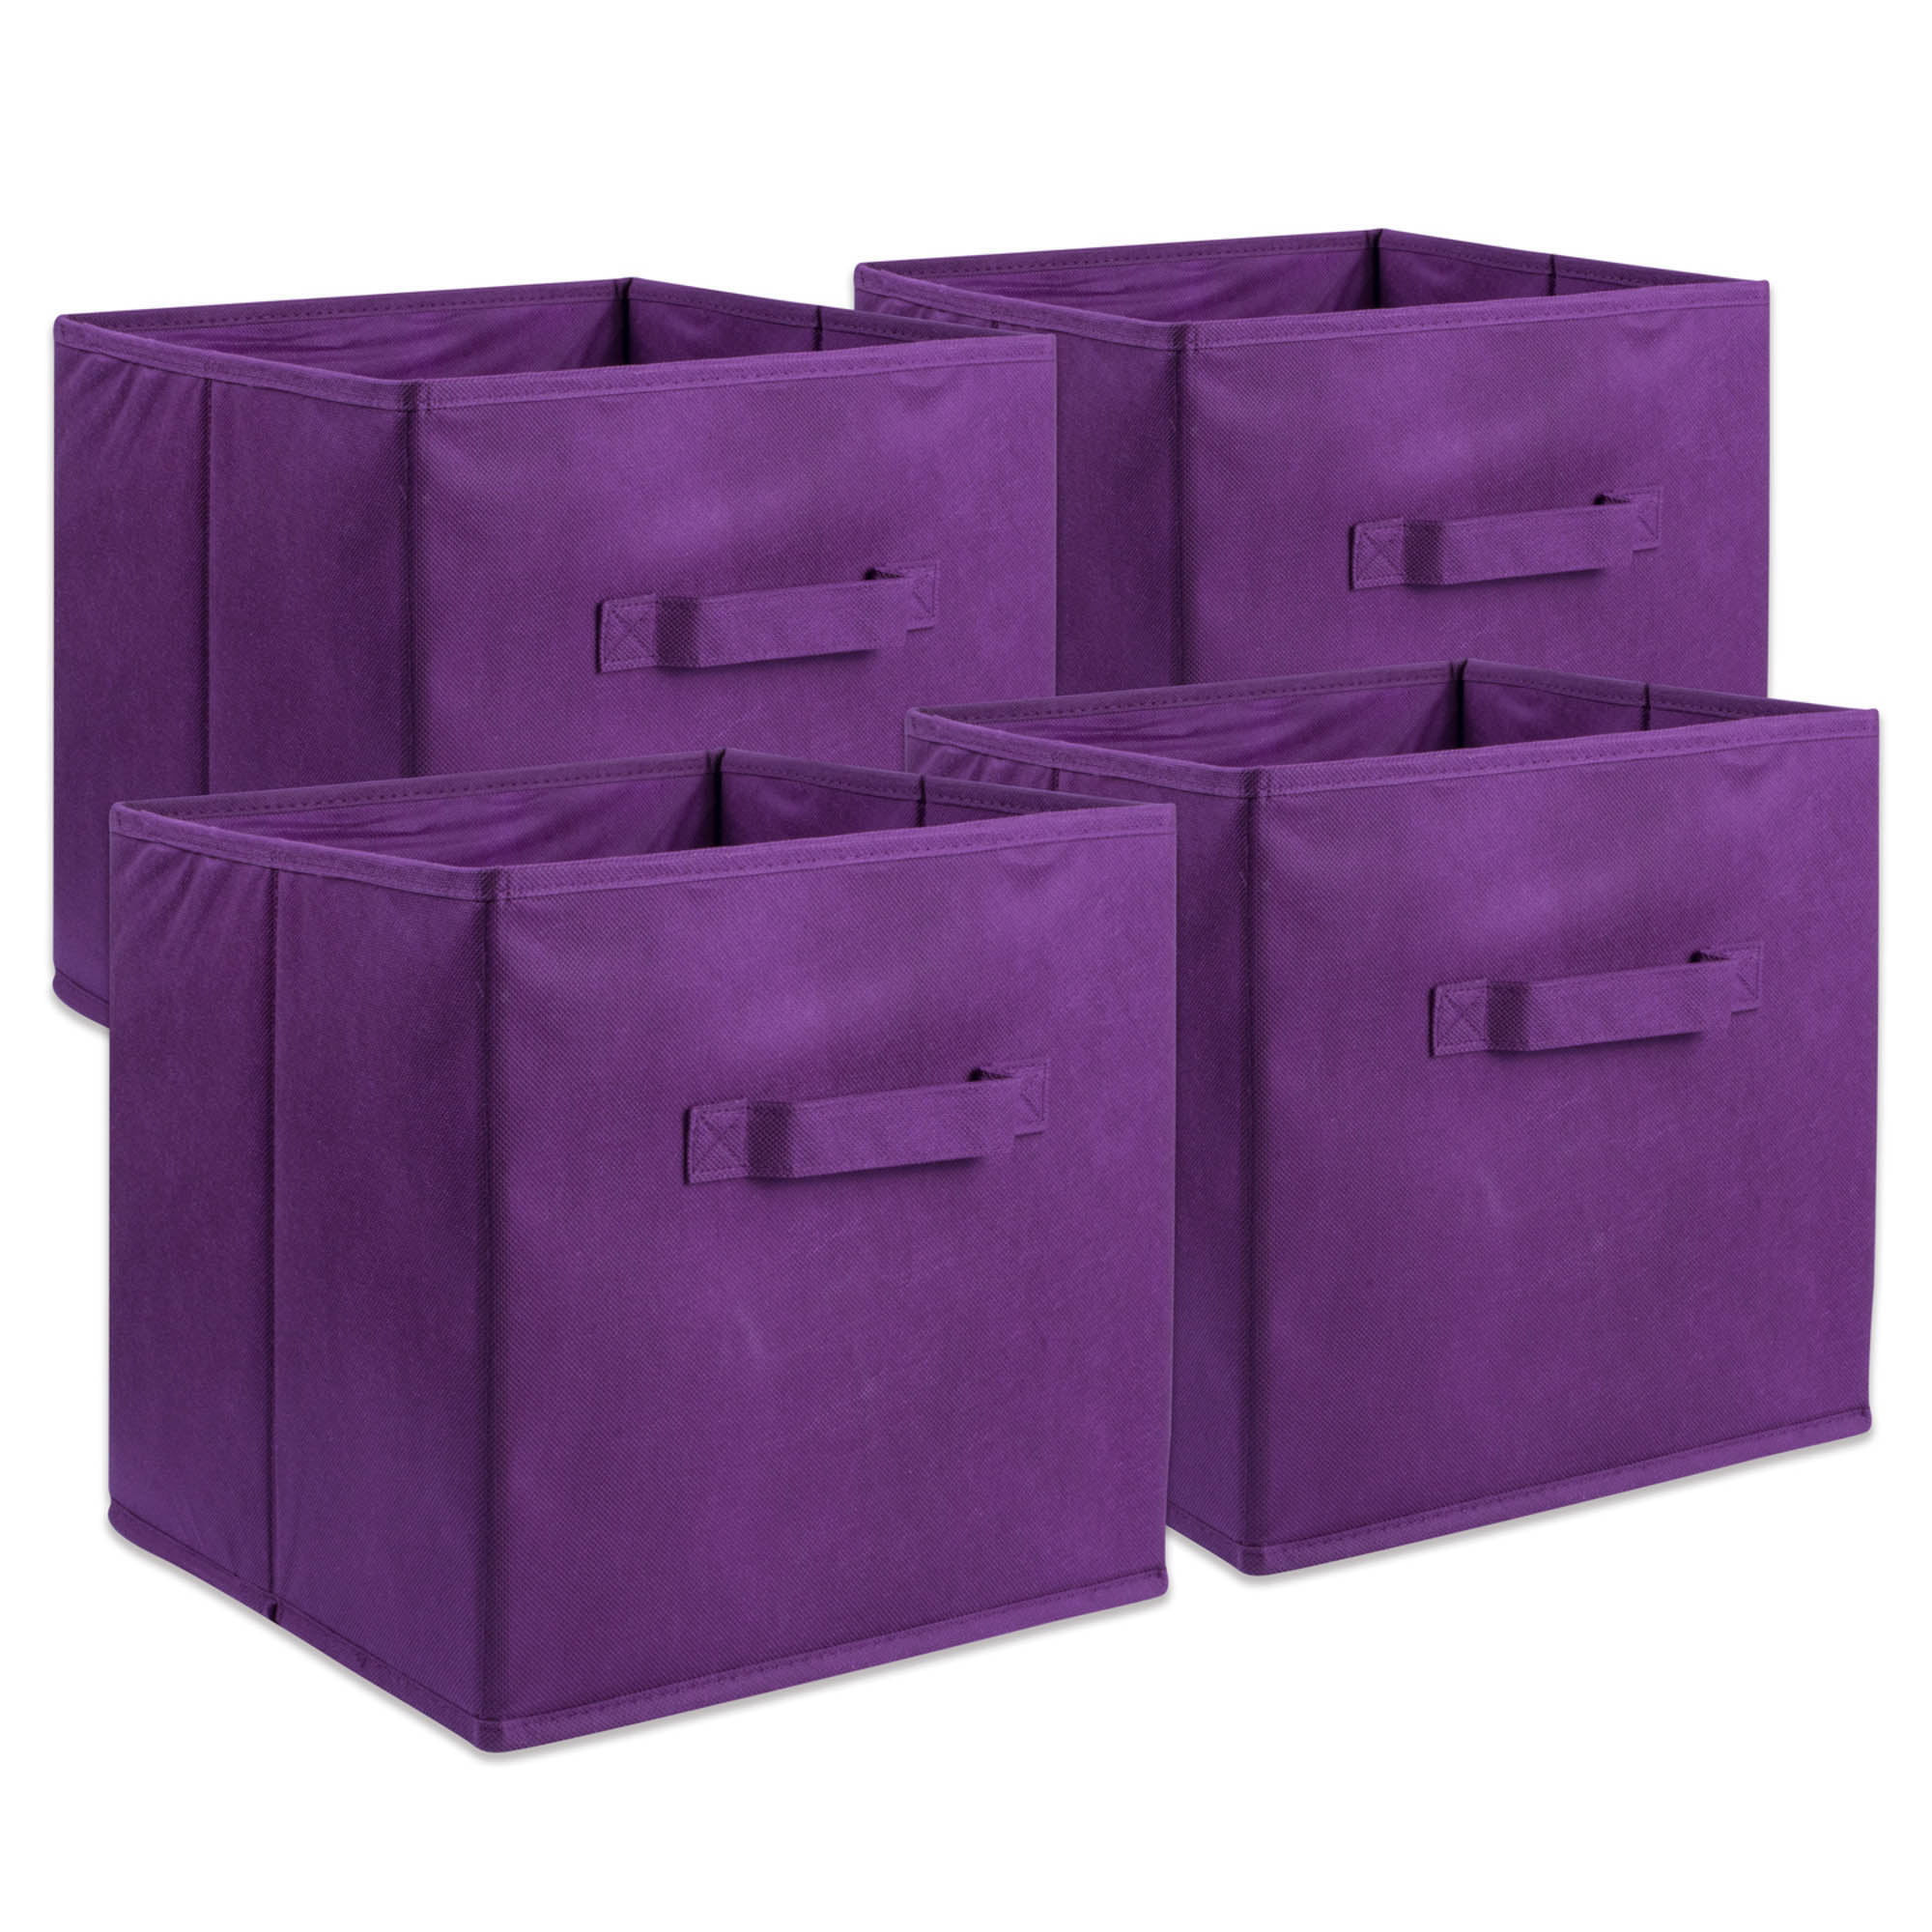 Details about   Fabric Storage Box Multipurpose Folding Square Basket Cube Utility Organizer Bag 